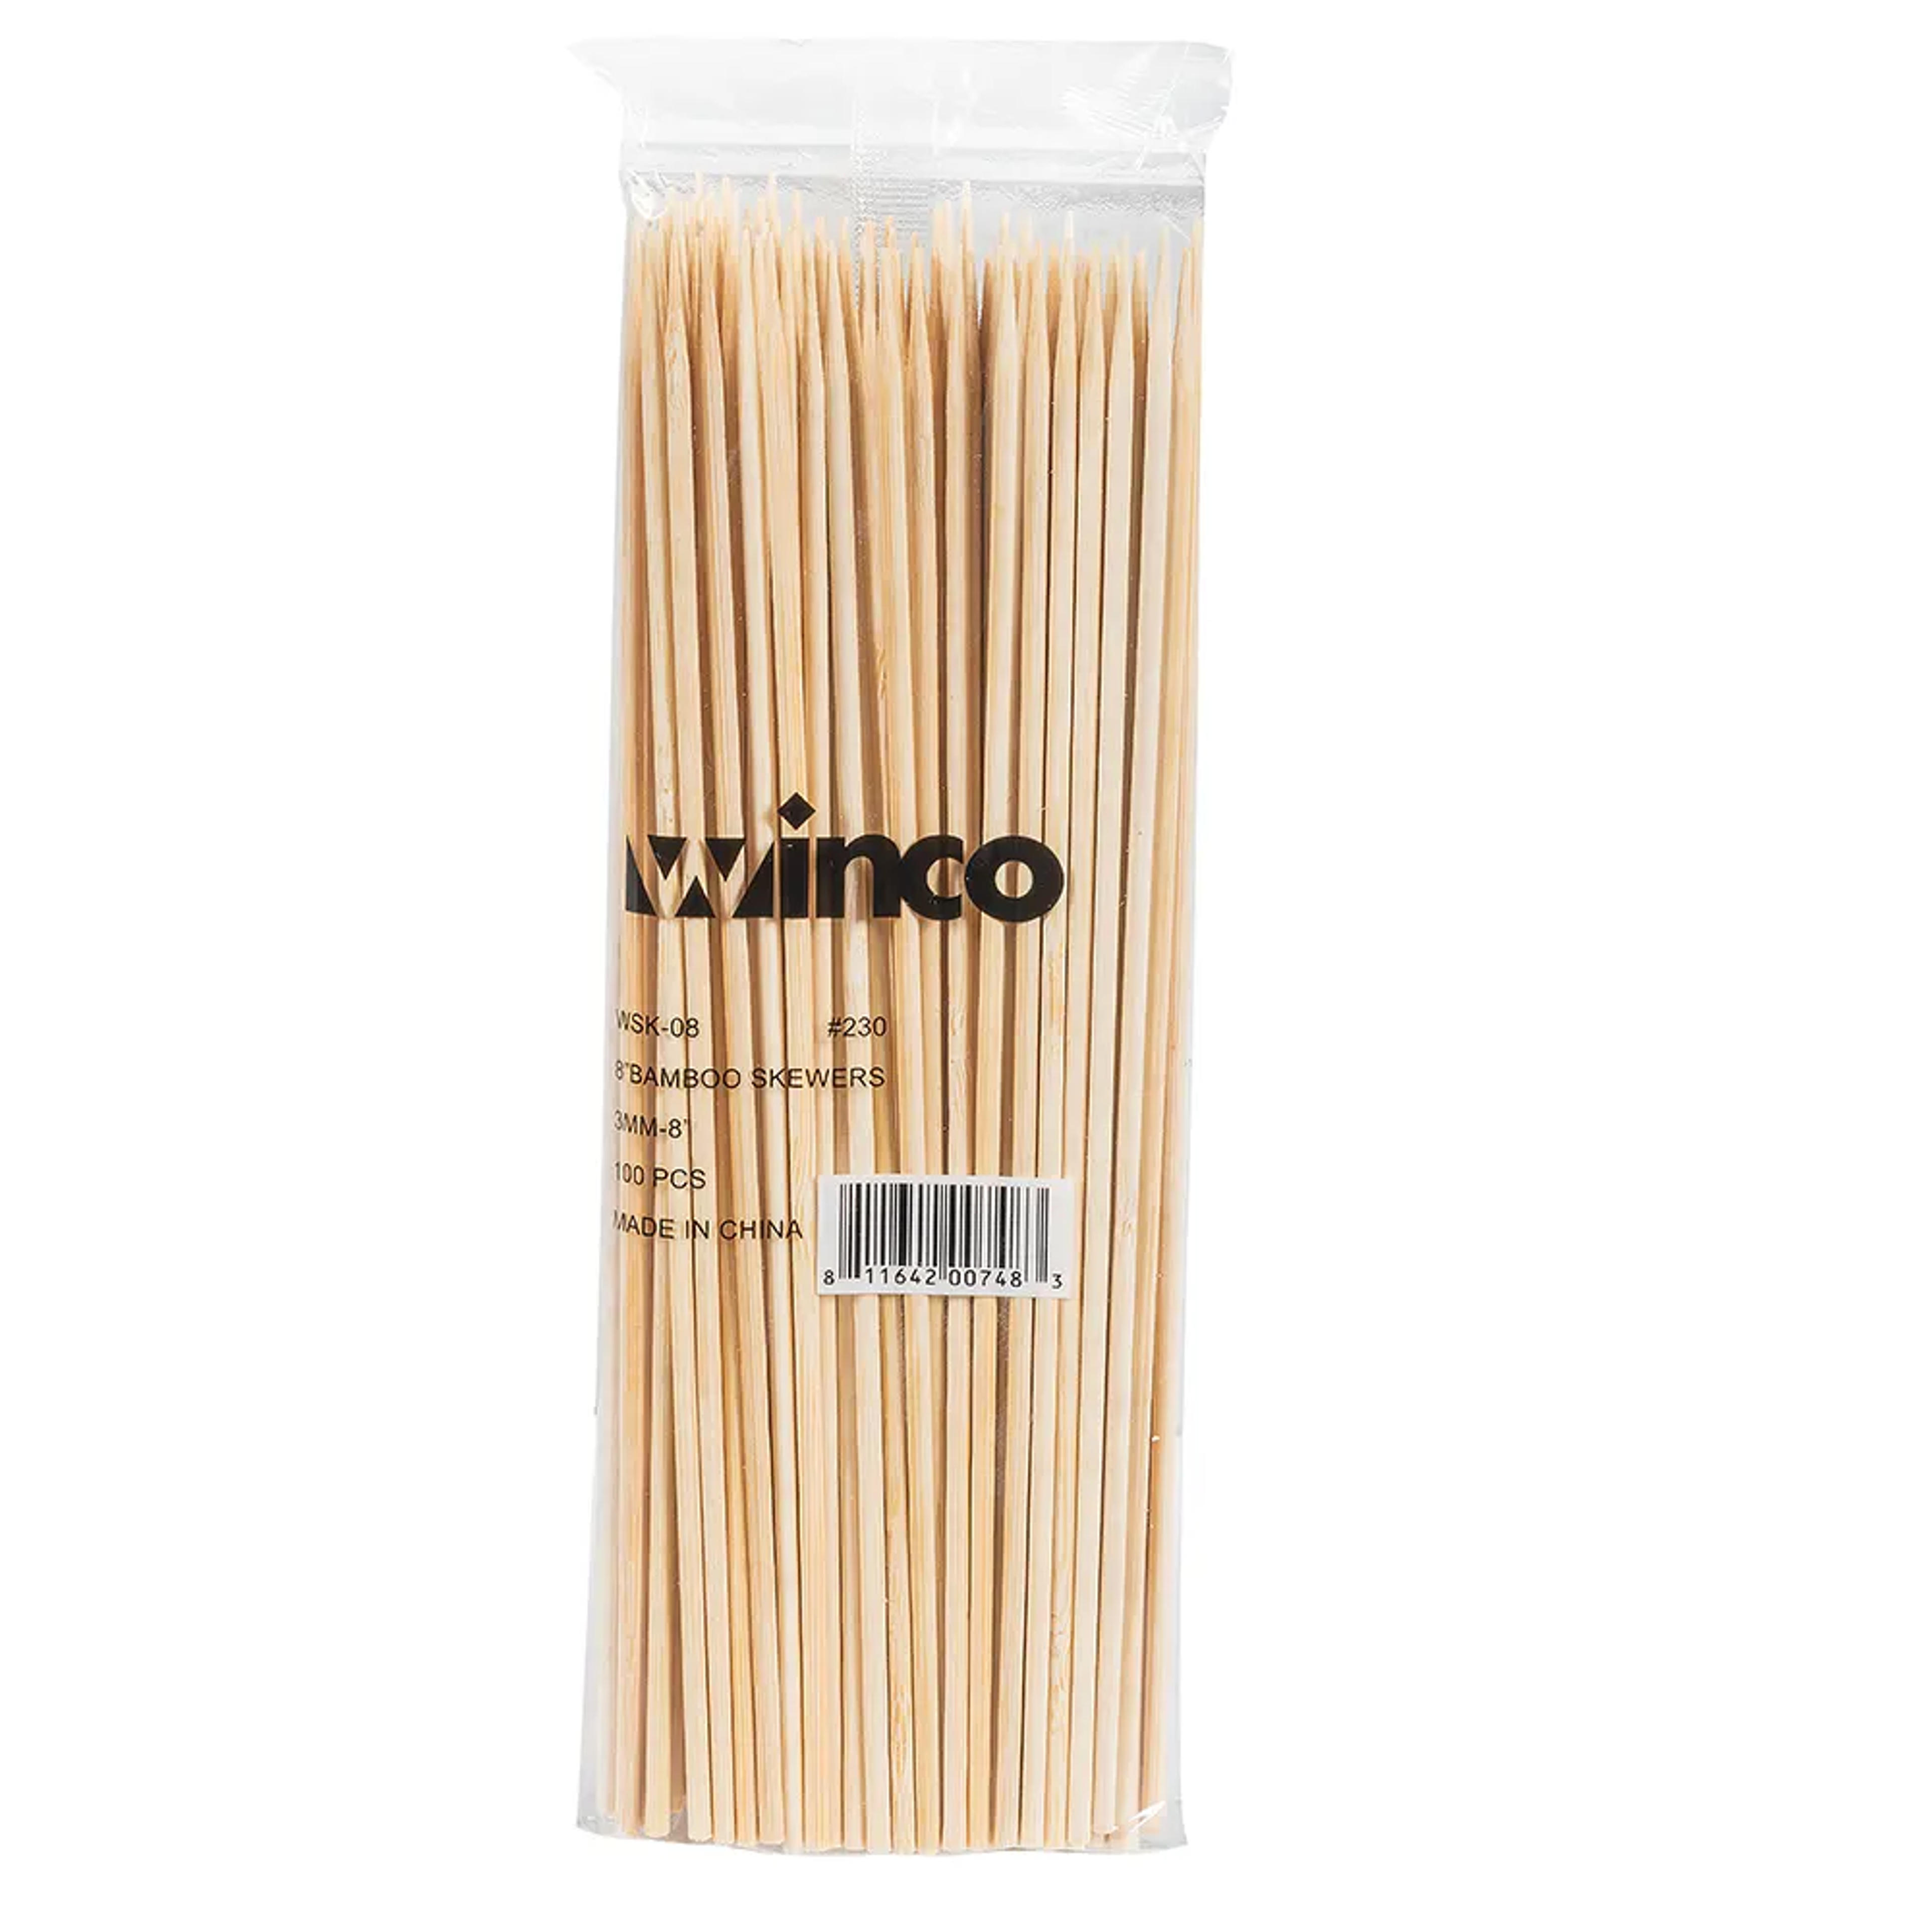 Winco WSK-08 8" Bamboo Skewers